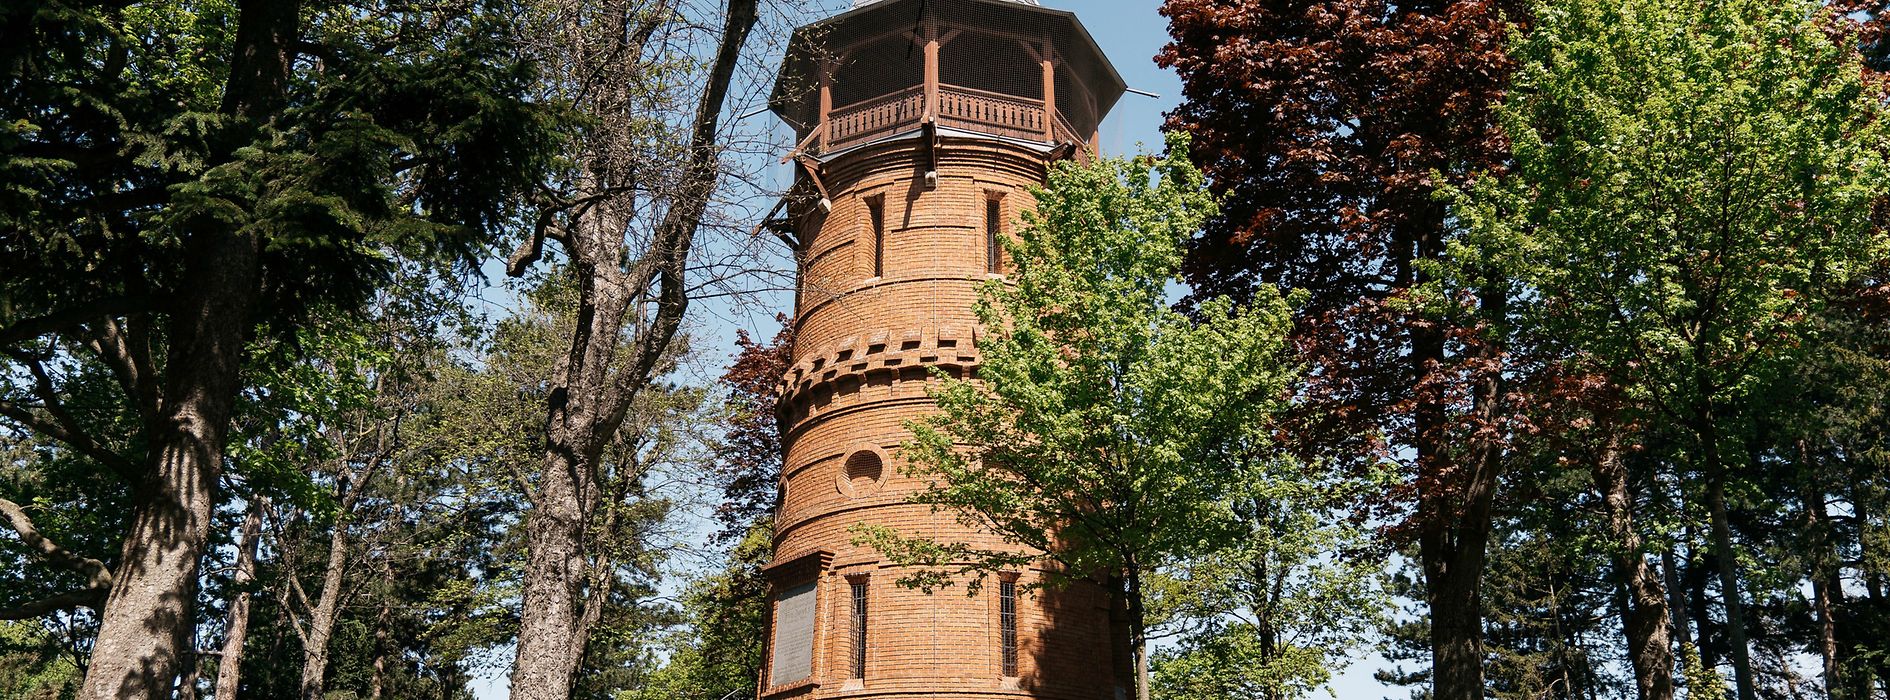 Atalaya Paulinewarte del parque vienés Türkenschanzpark